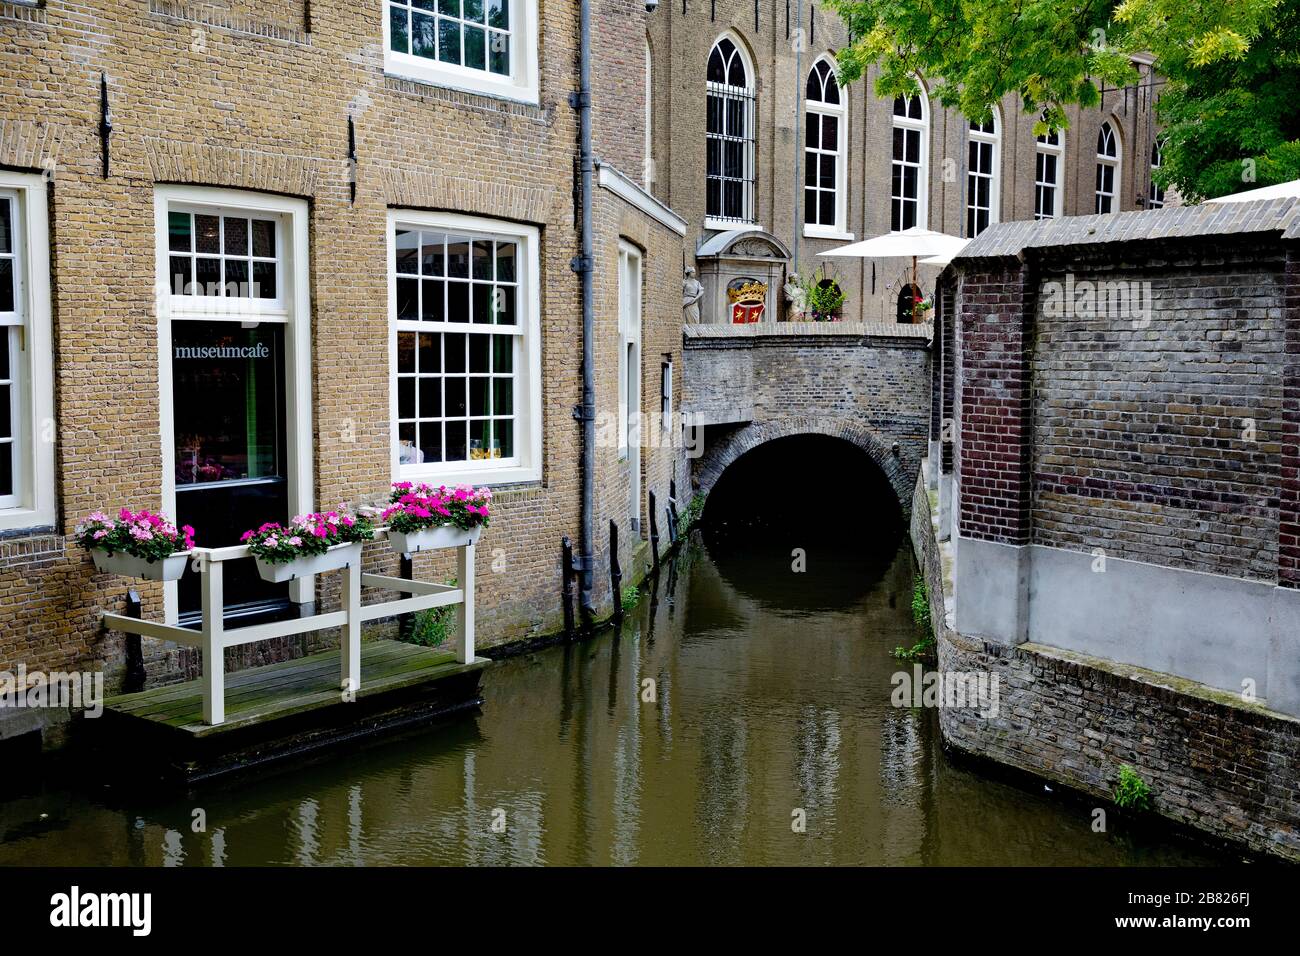 Vie d'acqua nel centro medievale di Gouda, Paesi Bassi Foto Stock